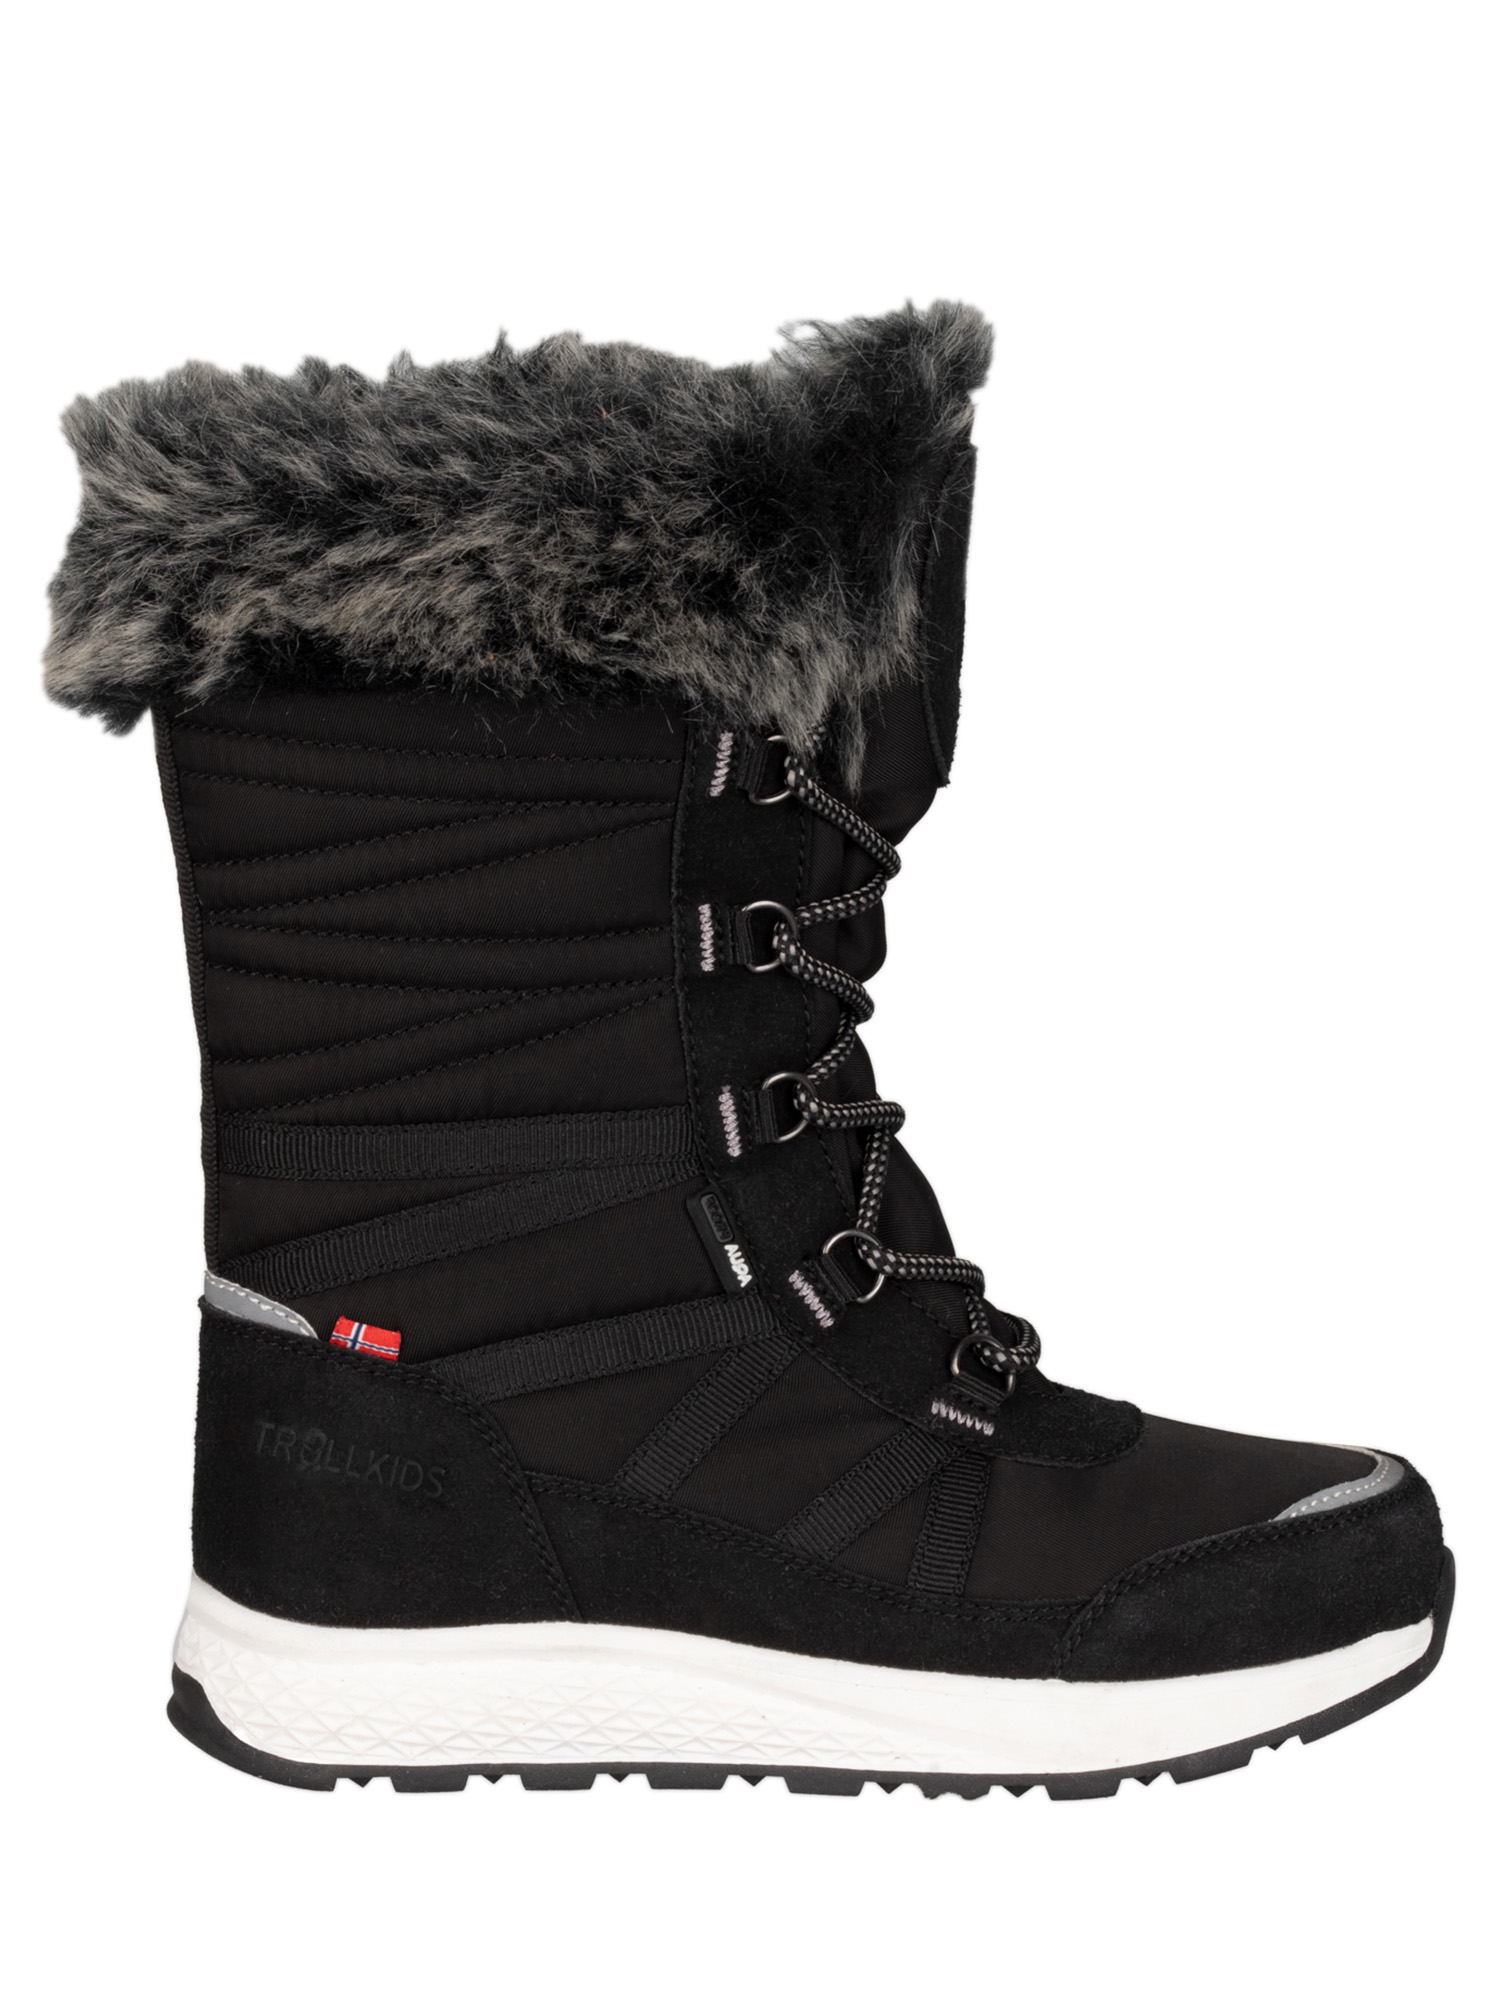 Ботинки Trollkids Girls Hemsedal Winter Boots Xt, черный, 35